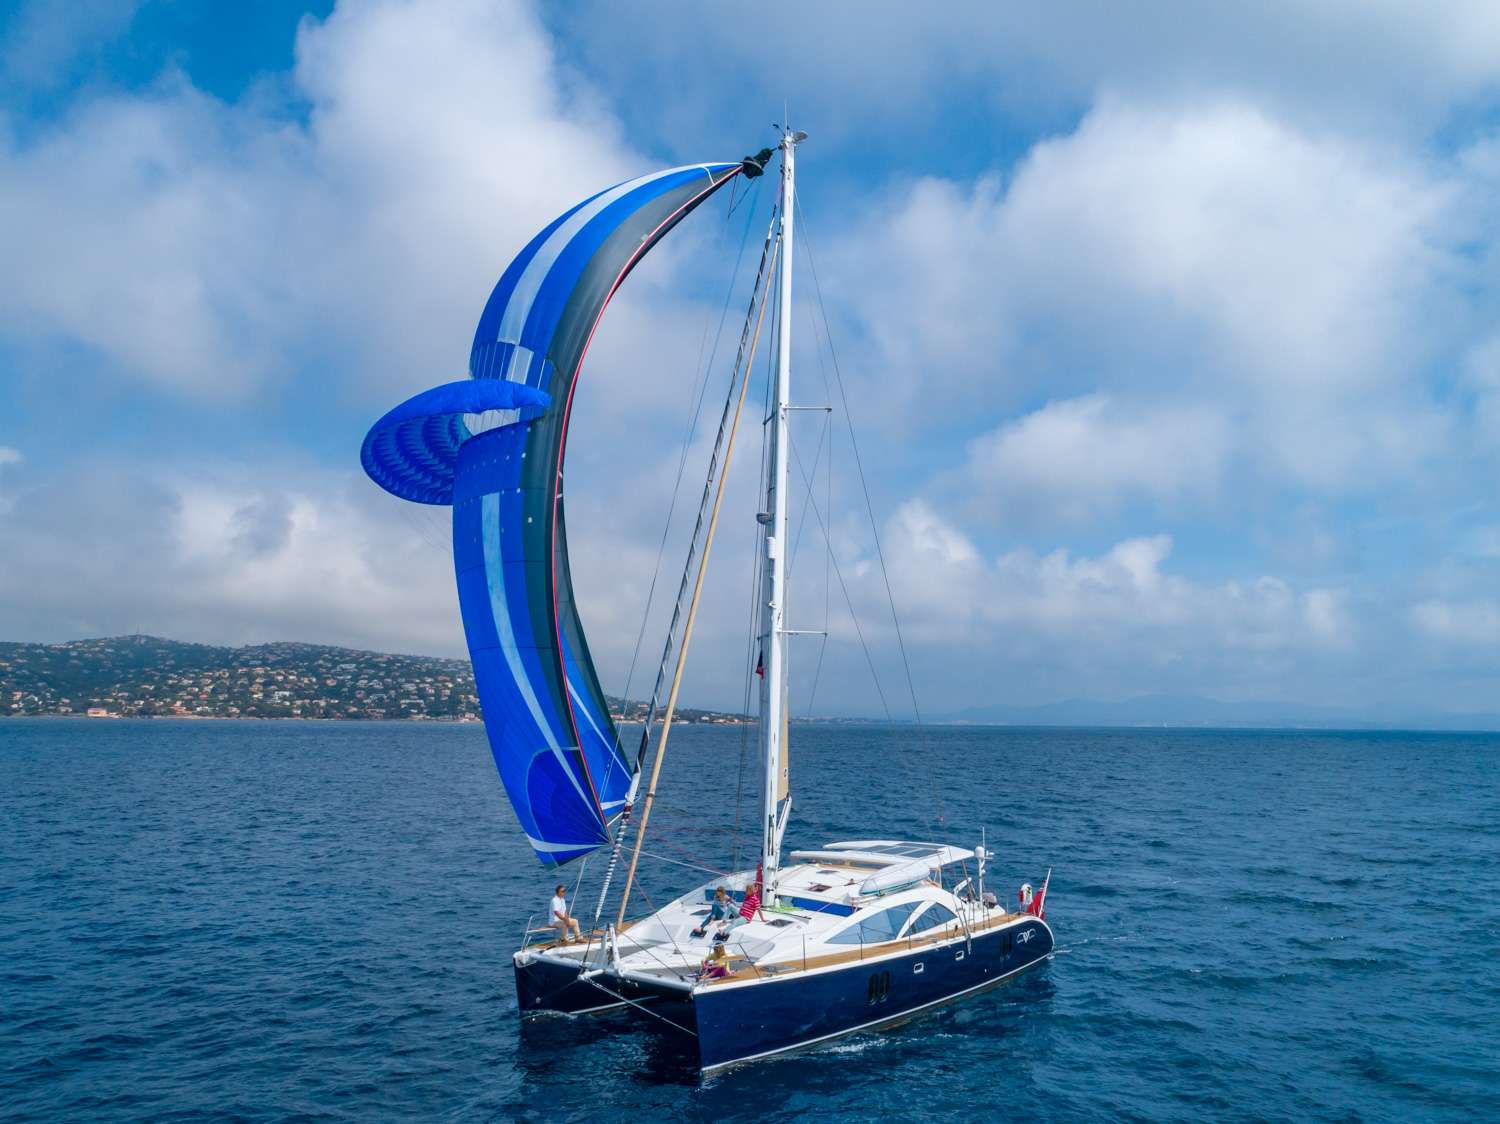 curanta cridhe - Yacht Charter Cogolin & Boat hire in Fr. Riviera & Tyrrhenian Sea 1